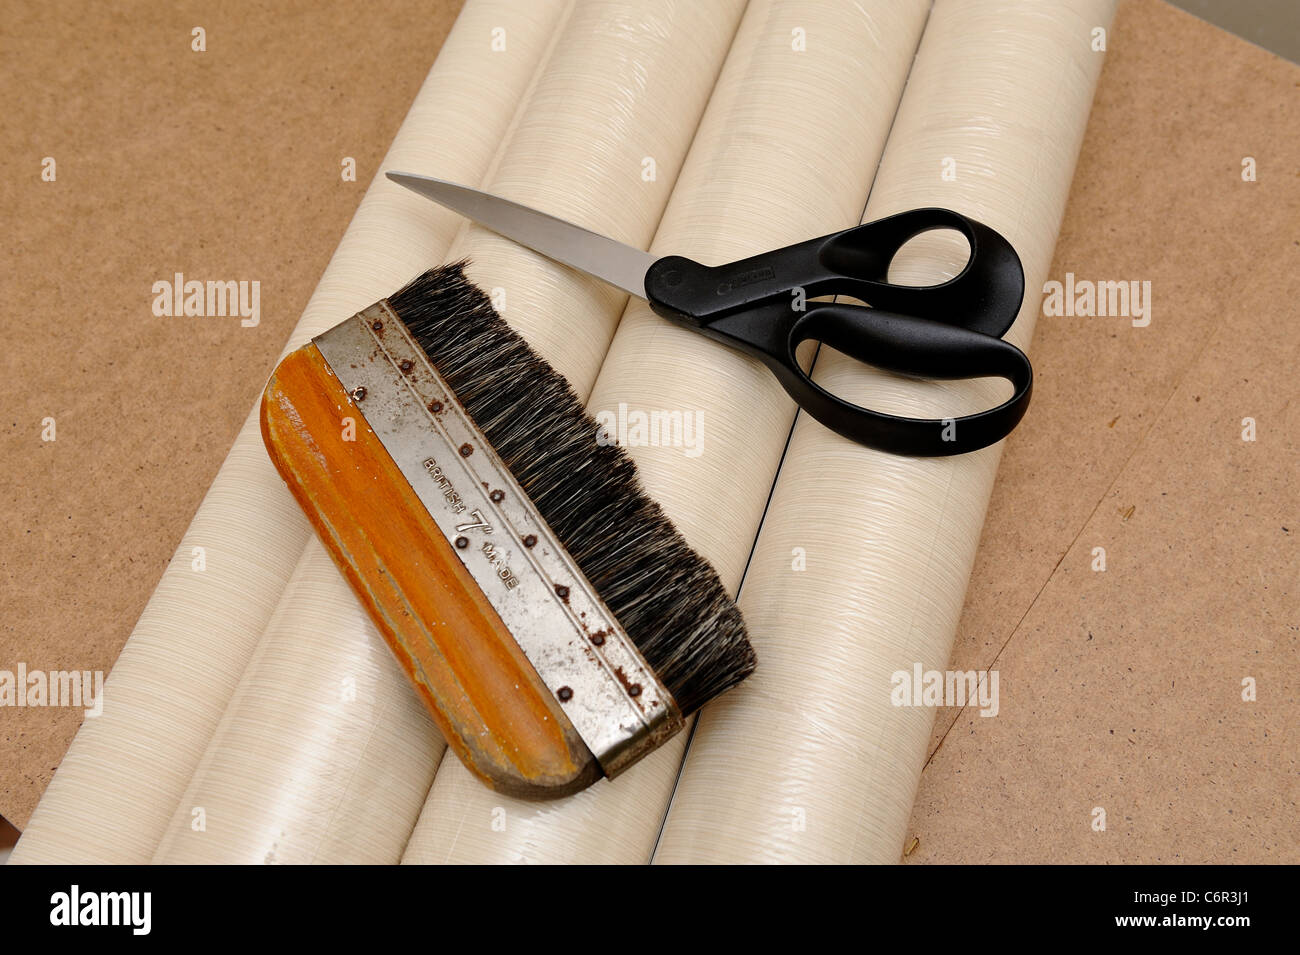 wallpaper scissors and smoothing brush england uk Stock Photo